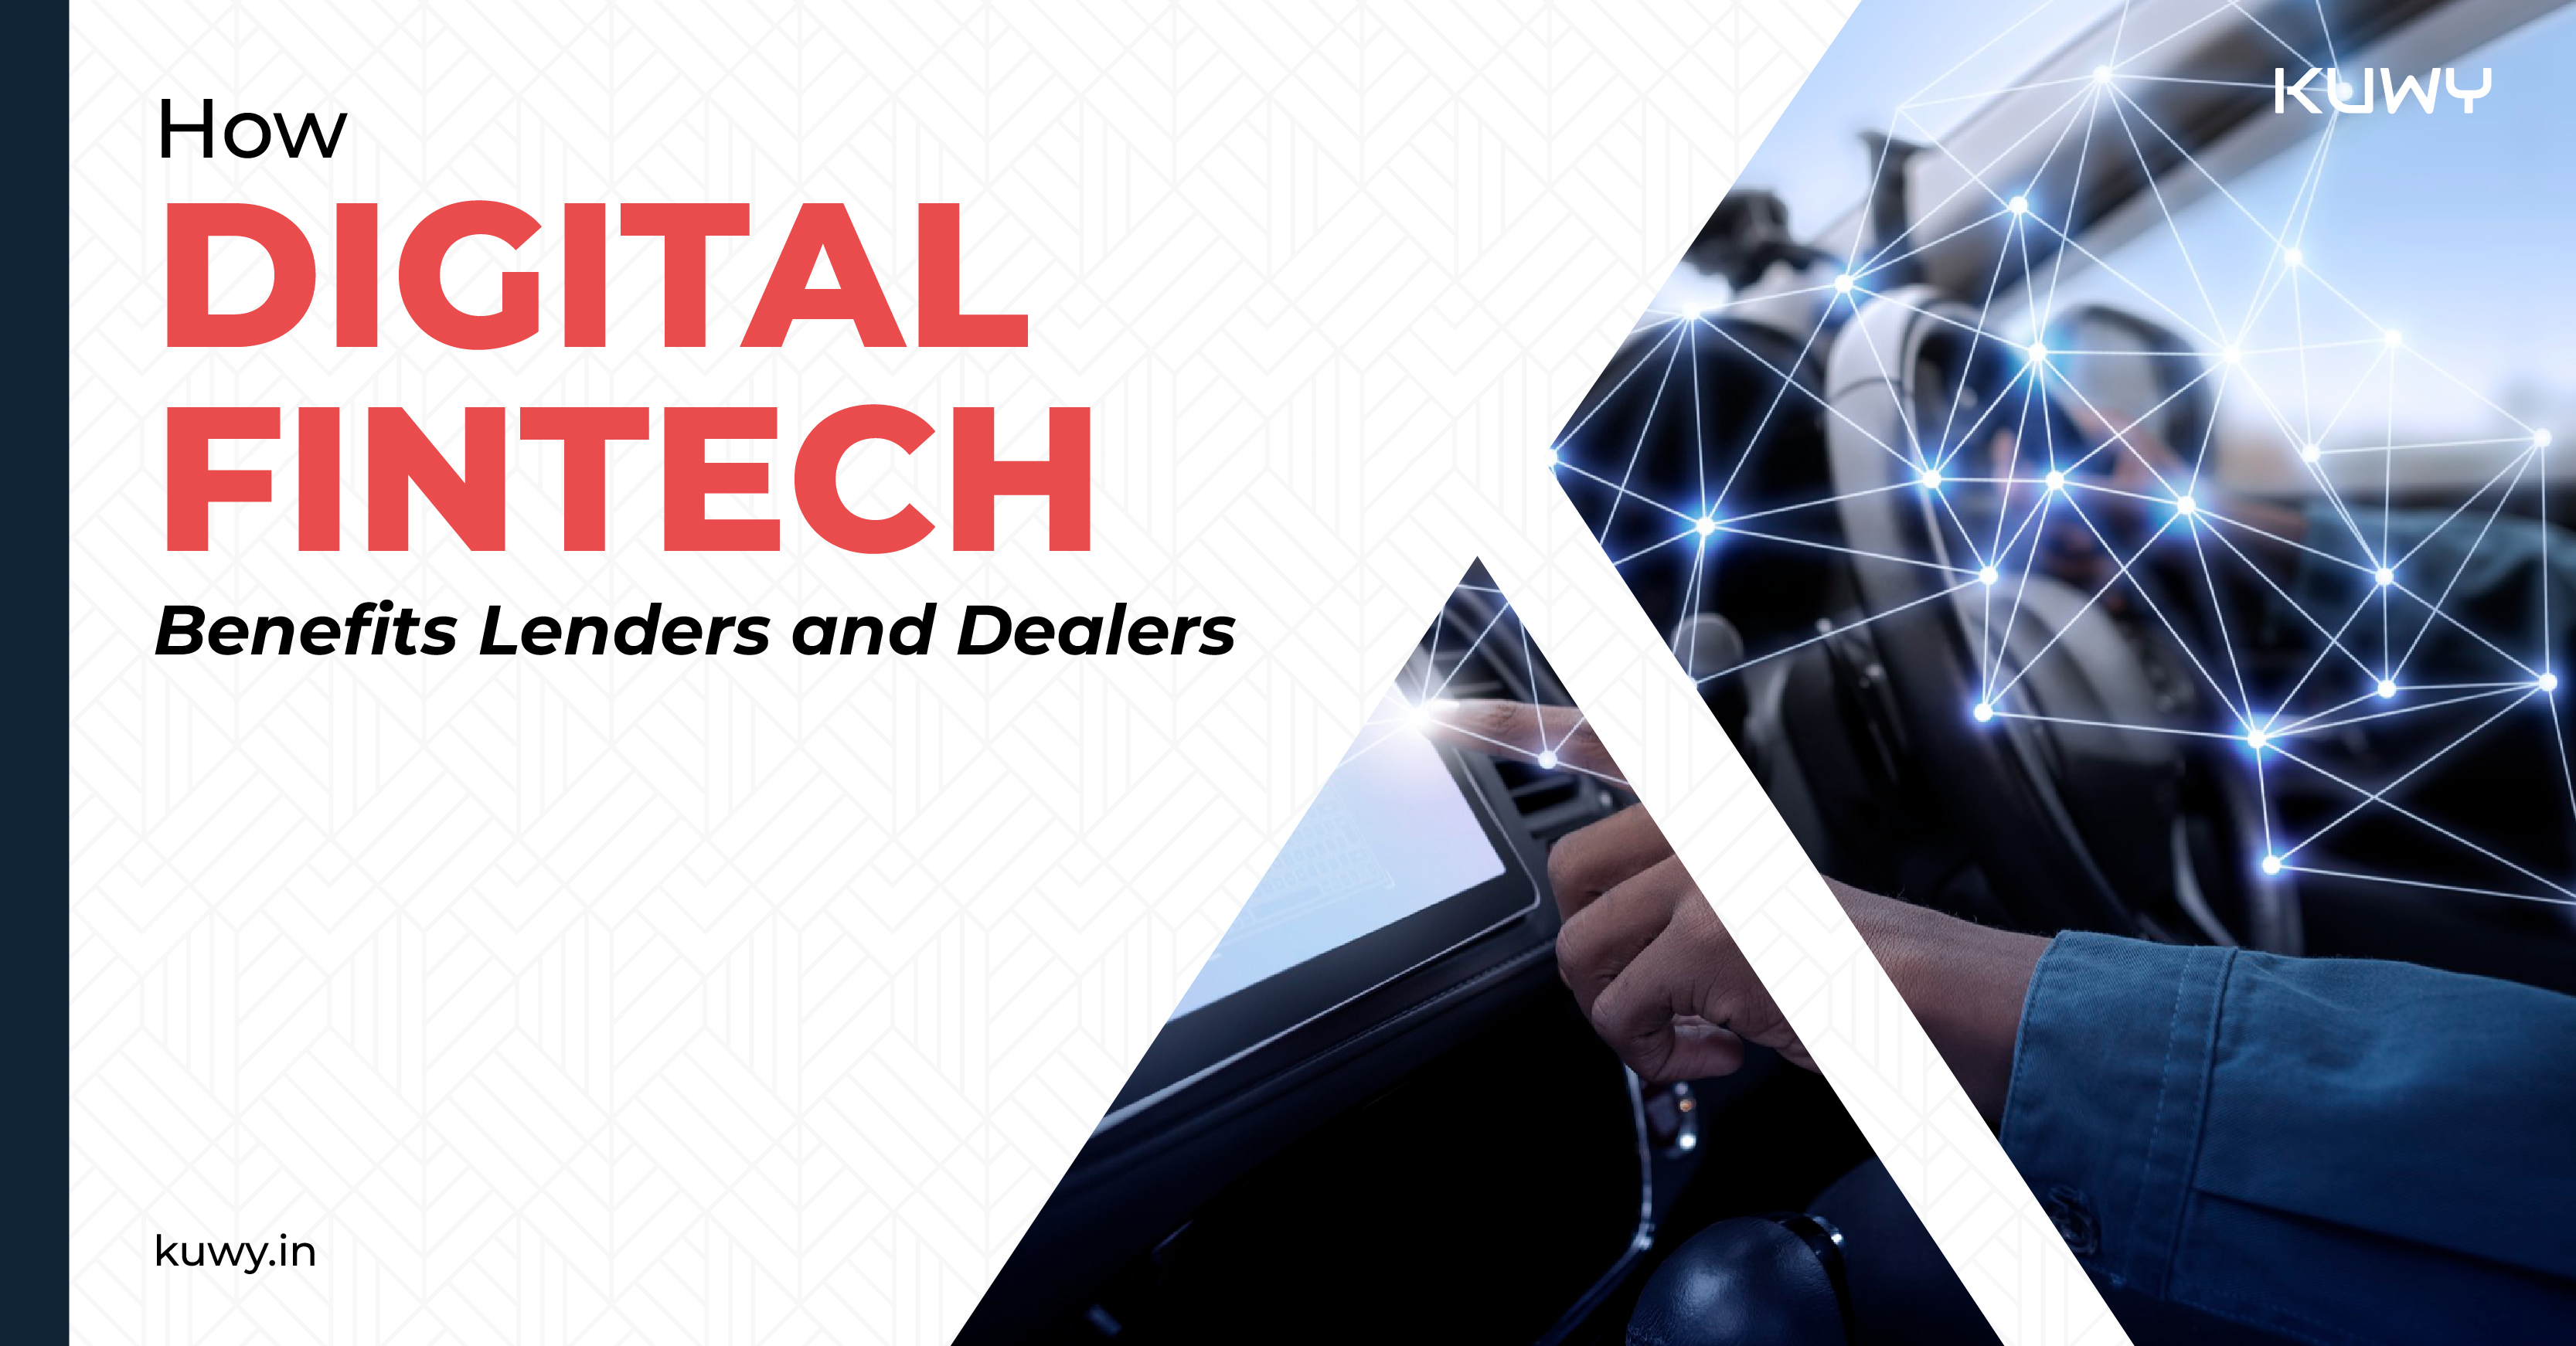 How Digital Fintech Benefits Lenders and Dealers